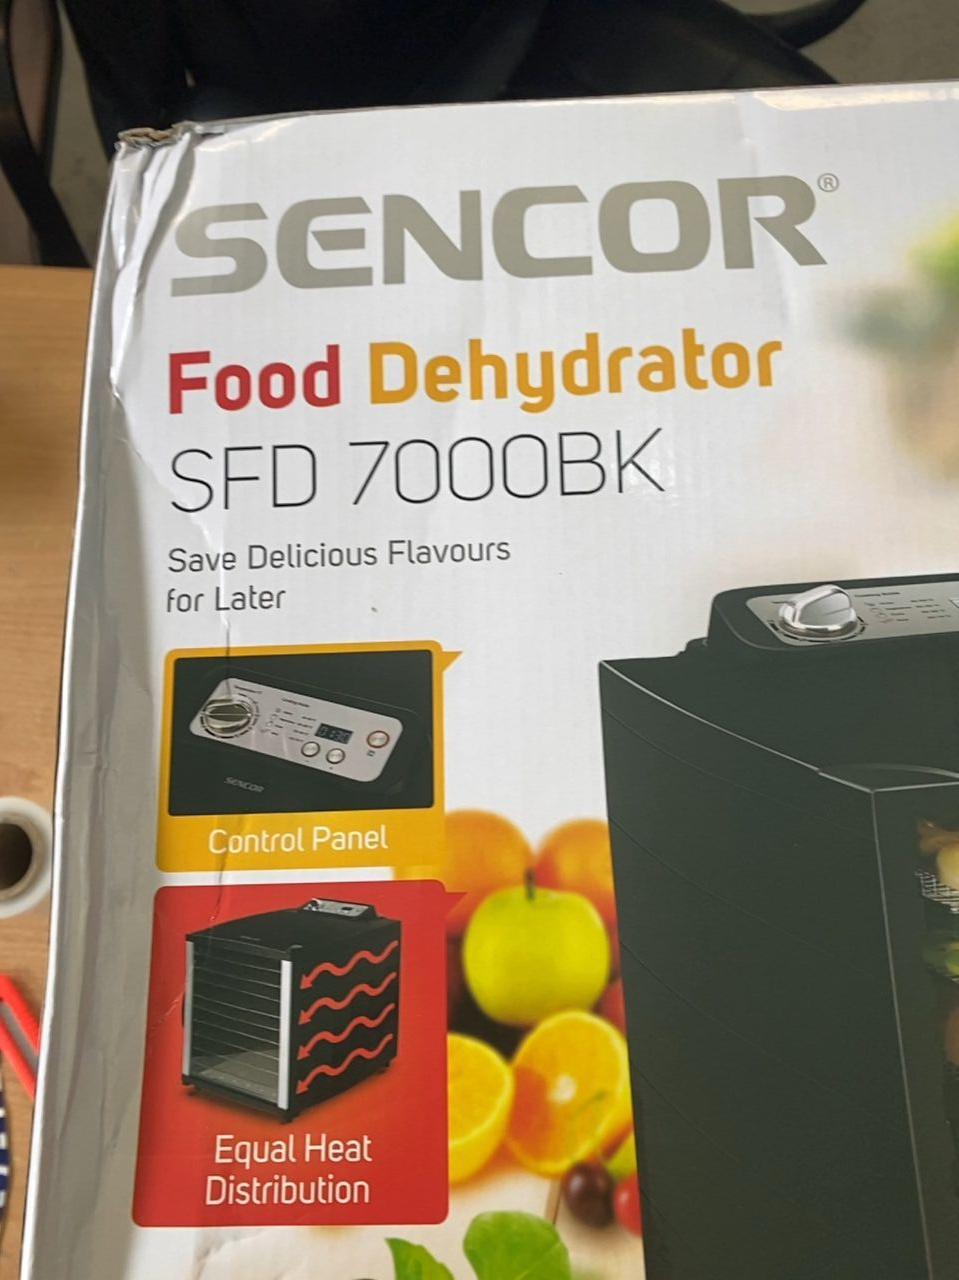 Food dehydrator, SFD 7000BK